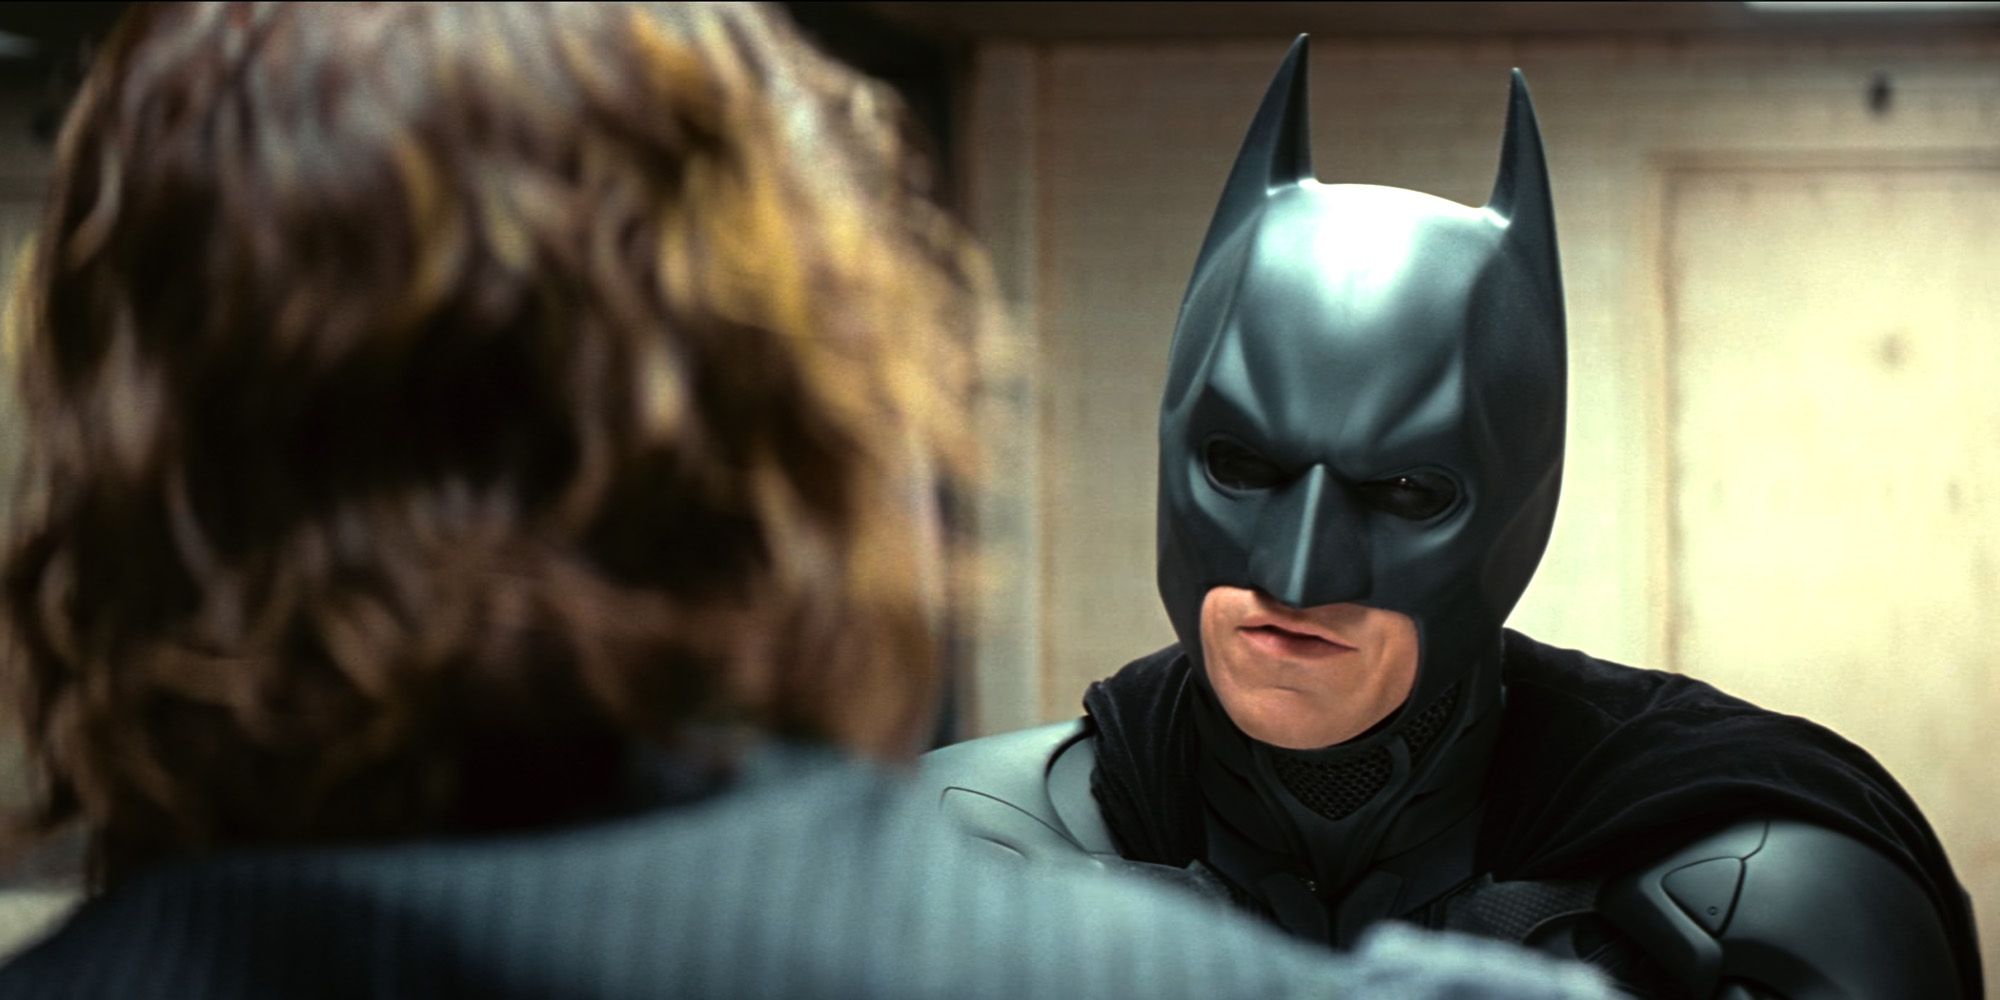 Batman interrogates the Joker in The Dark Knight.